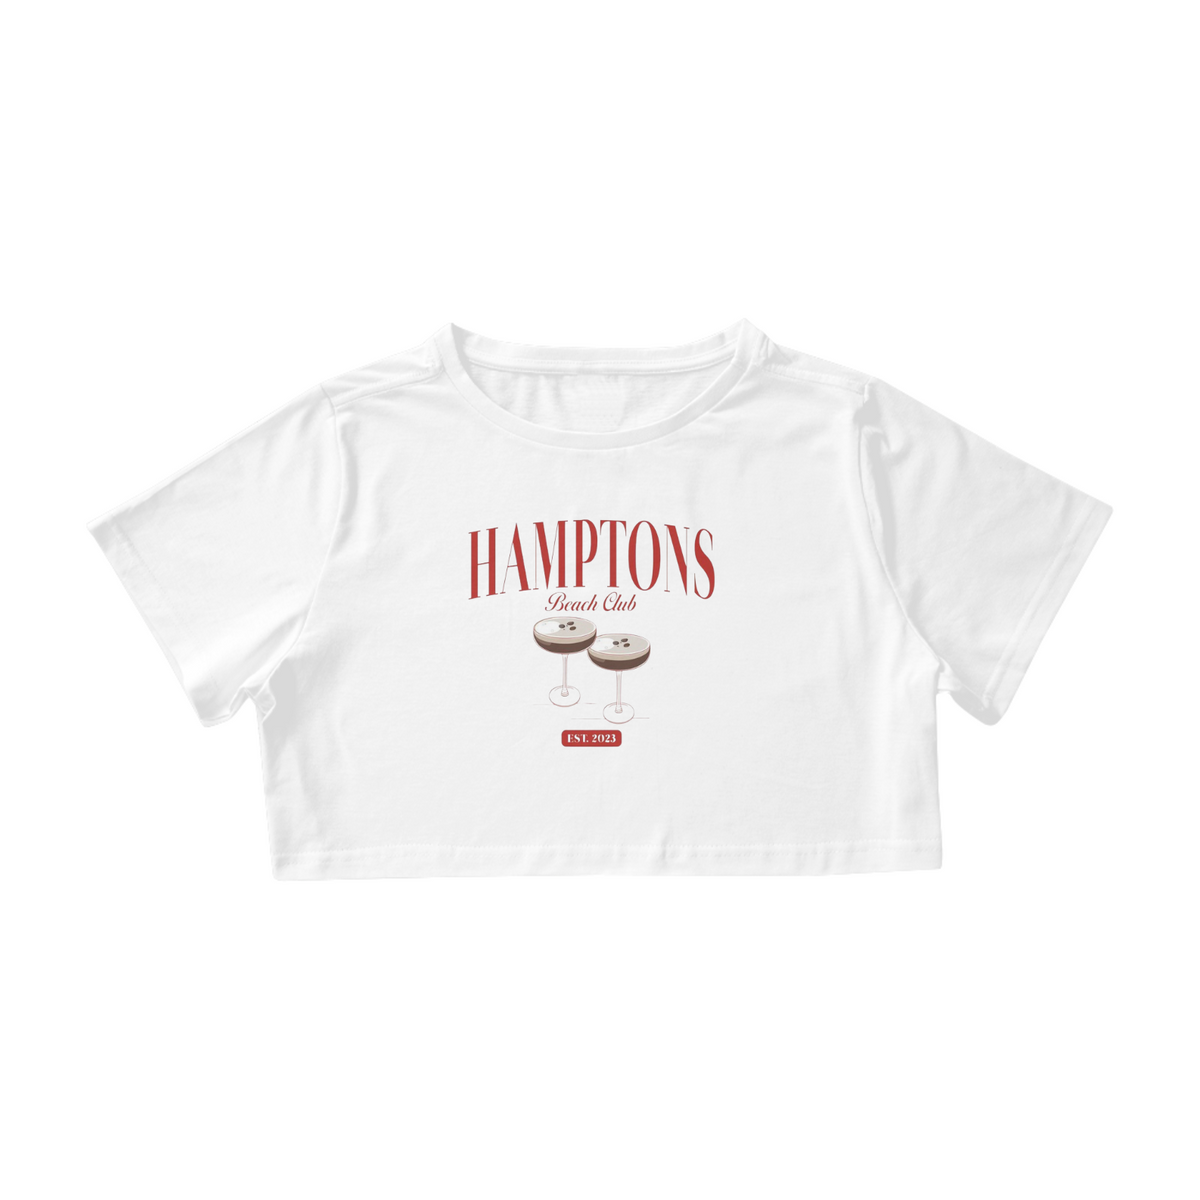 Nome do produto: Cropped Hamptons